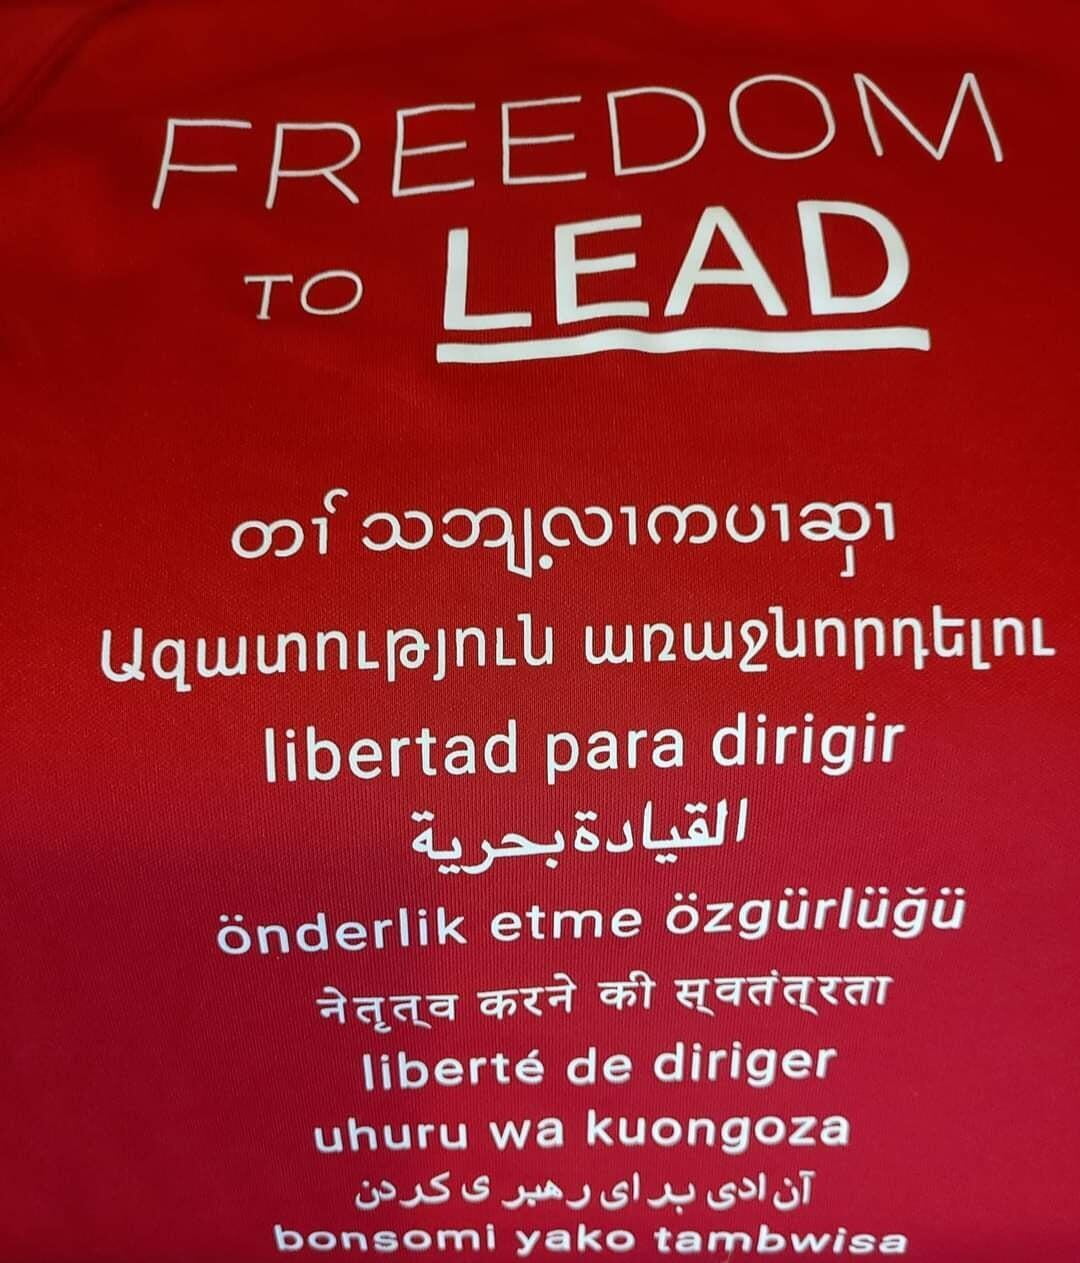 Multi-lingual "Freedom to LEAD" shirt.